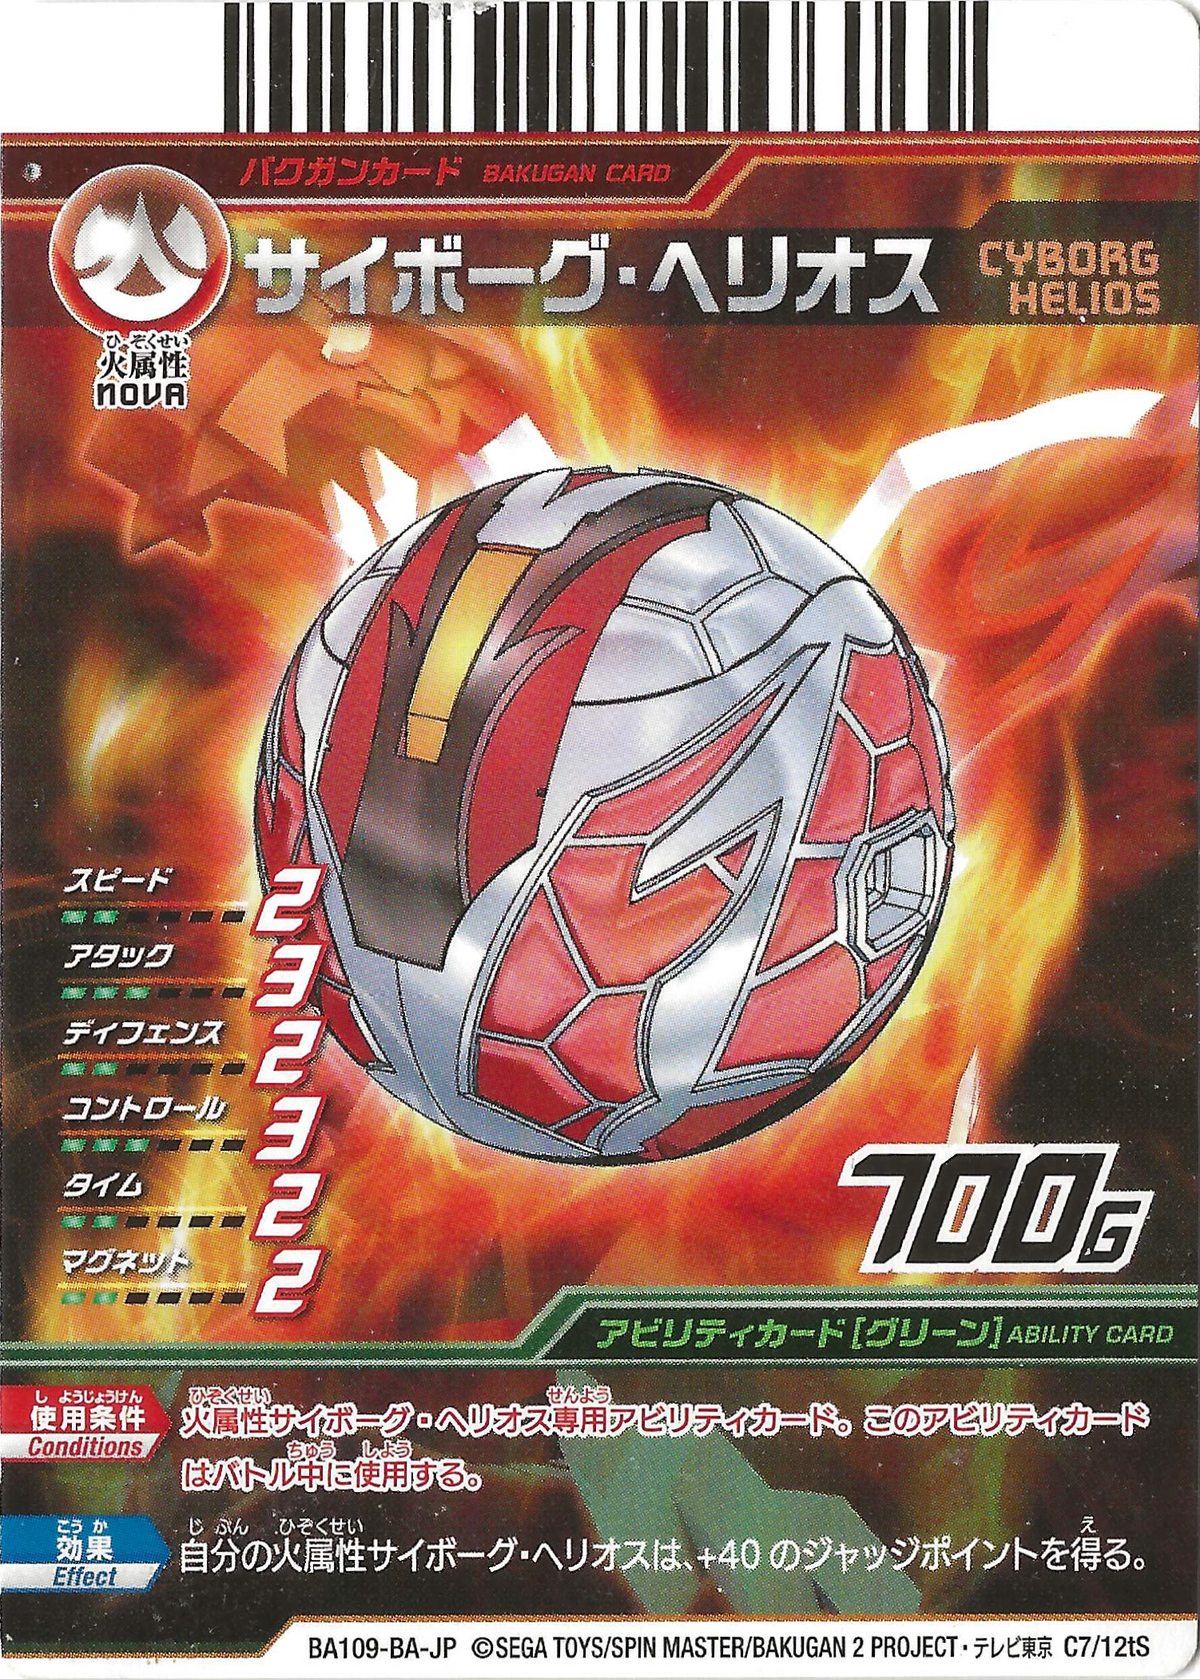 Cyborg Helios (C7/12tS) - The Bakugan Wiki